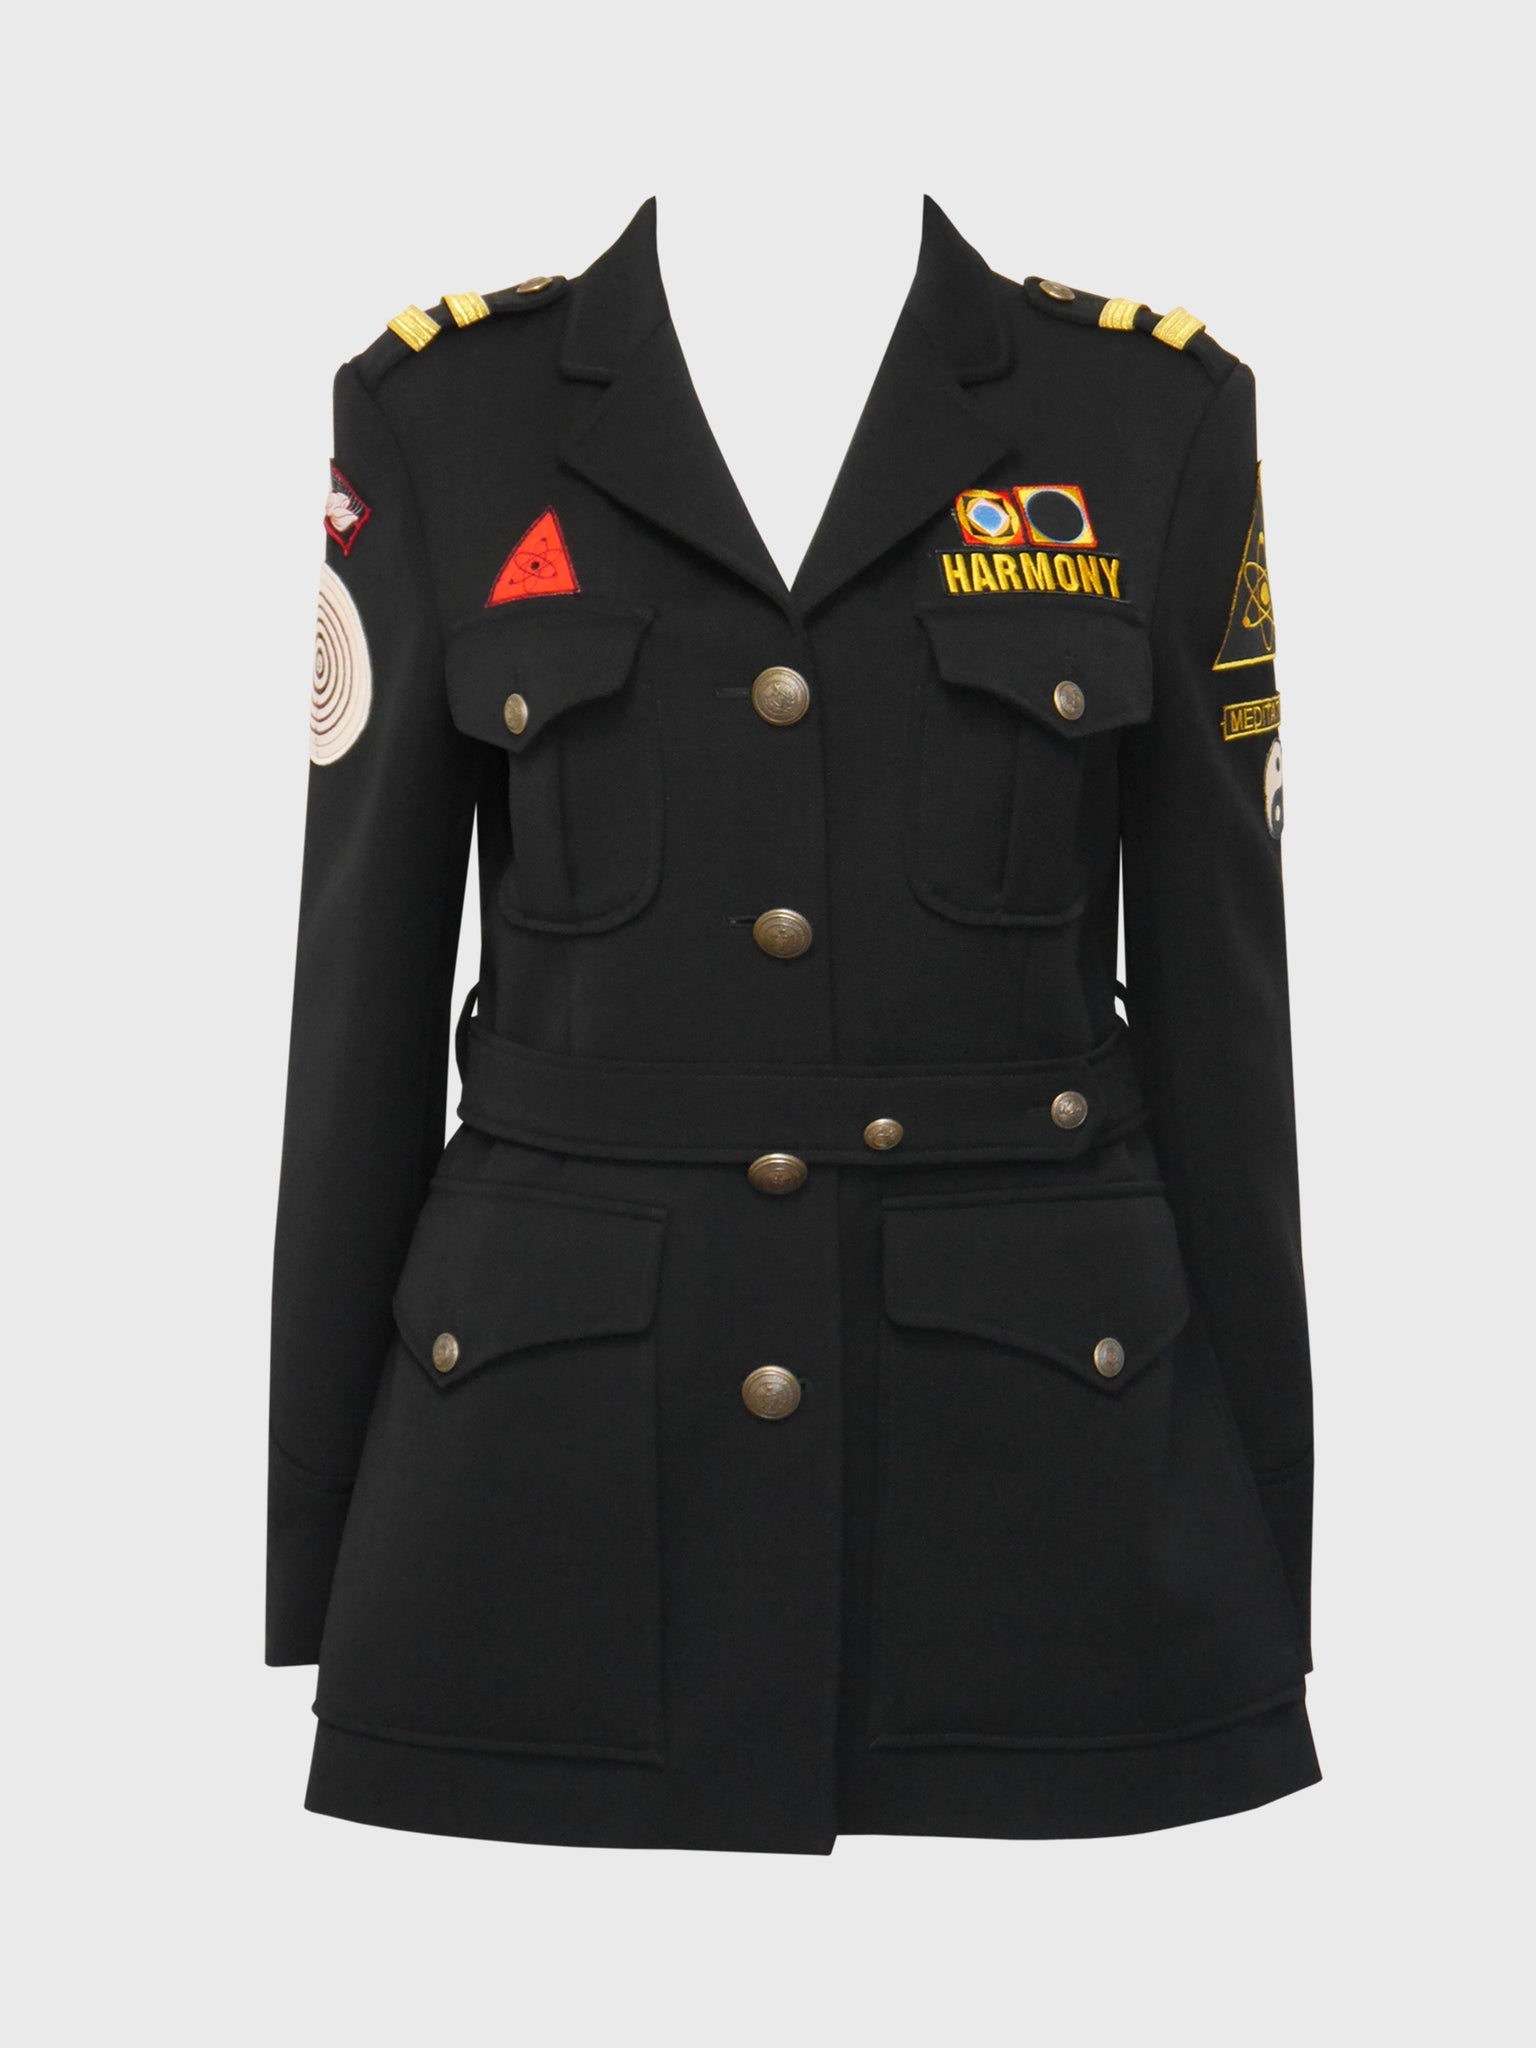 MOSCHINO Fall 1997 Vintage Harmony Chakra Yin Yang Military Uniform Jacket